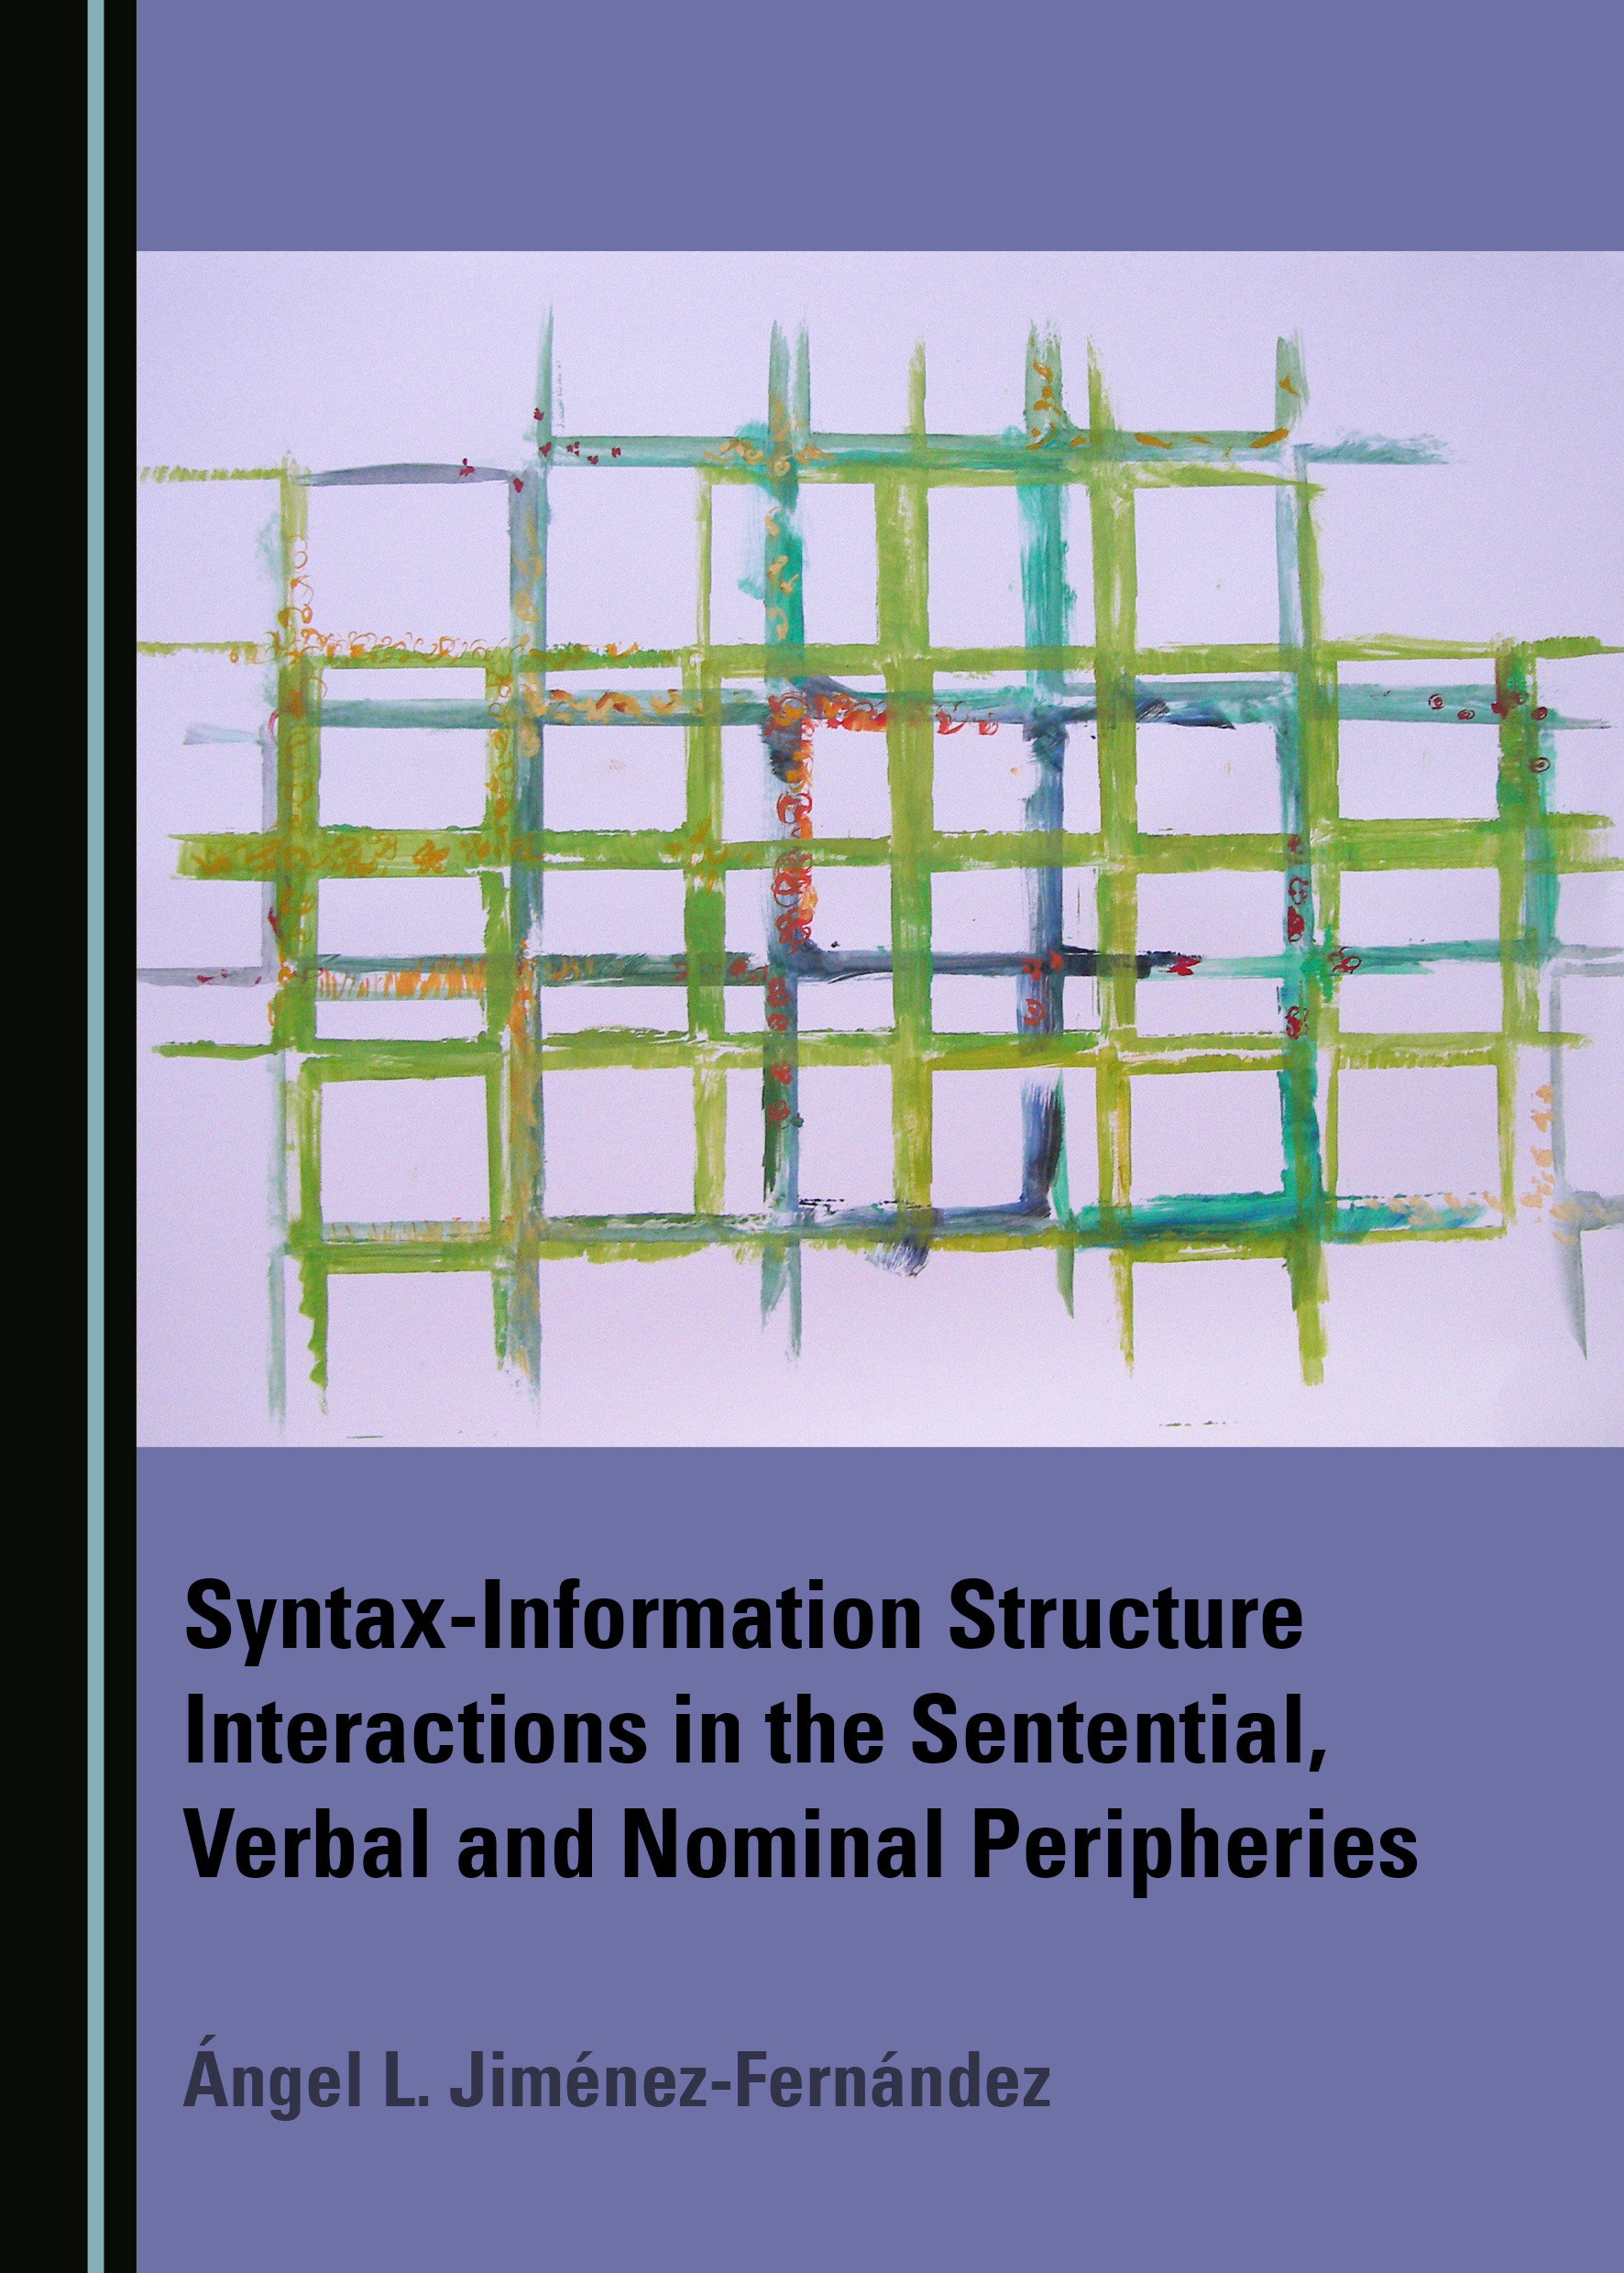 Imagen de portada del libro Syntax-Information Structure Interactions in the Sentential, Verbal and Nominal Peripheries